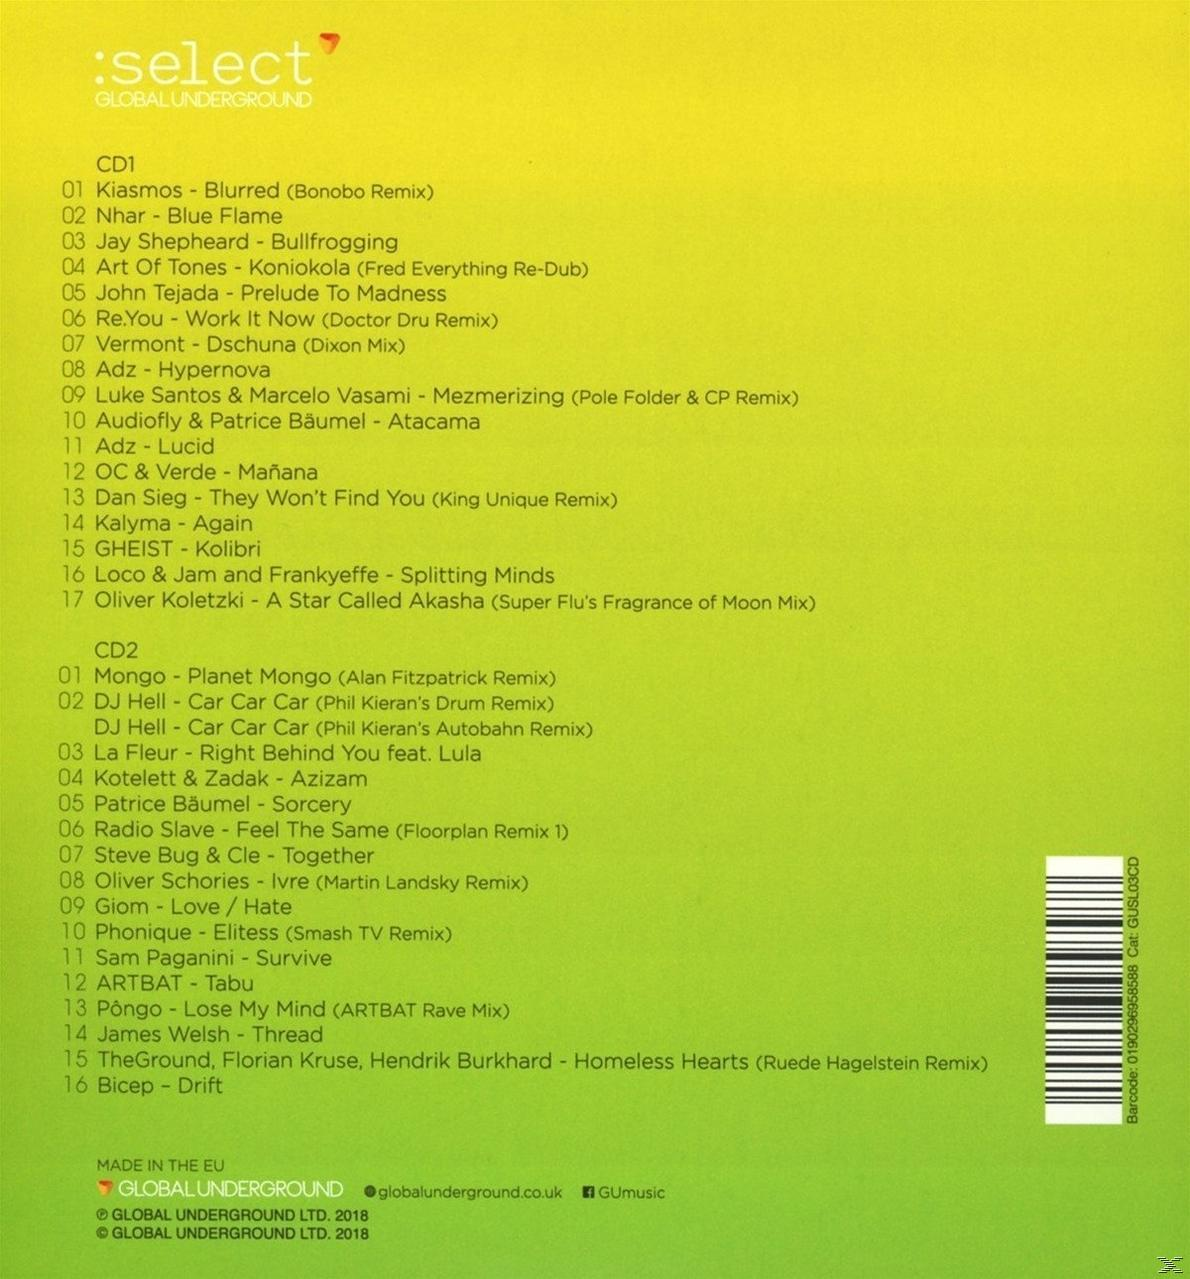 Global (CD) Underground: Underground Select #3 - - Global